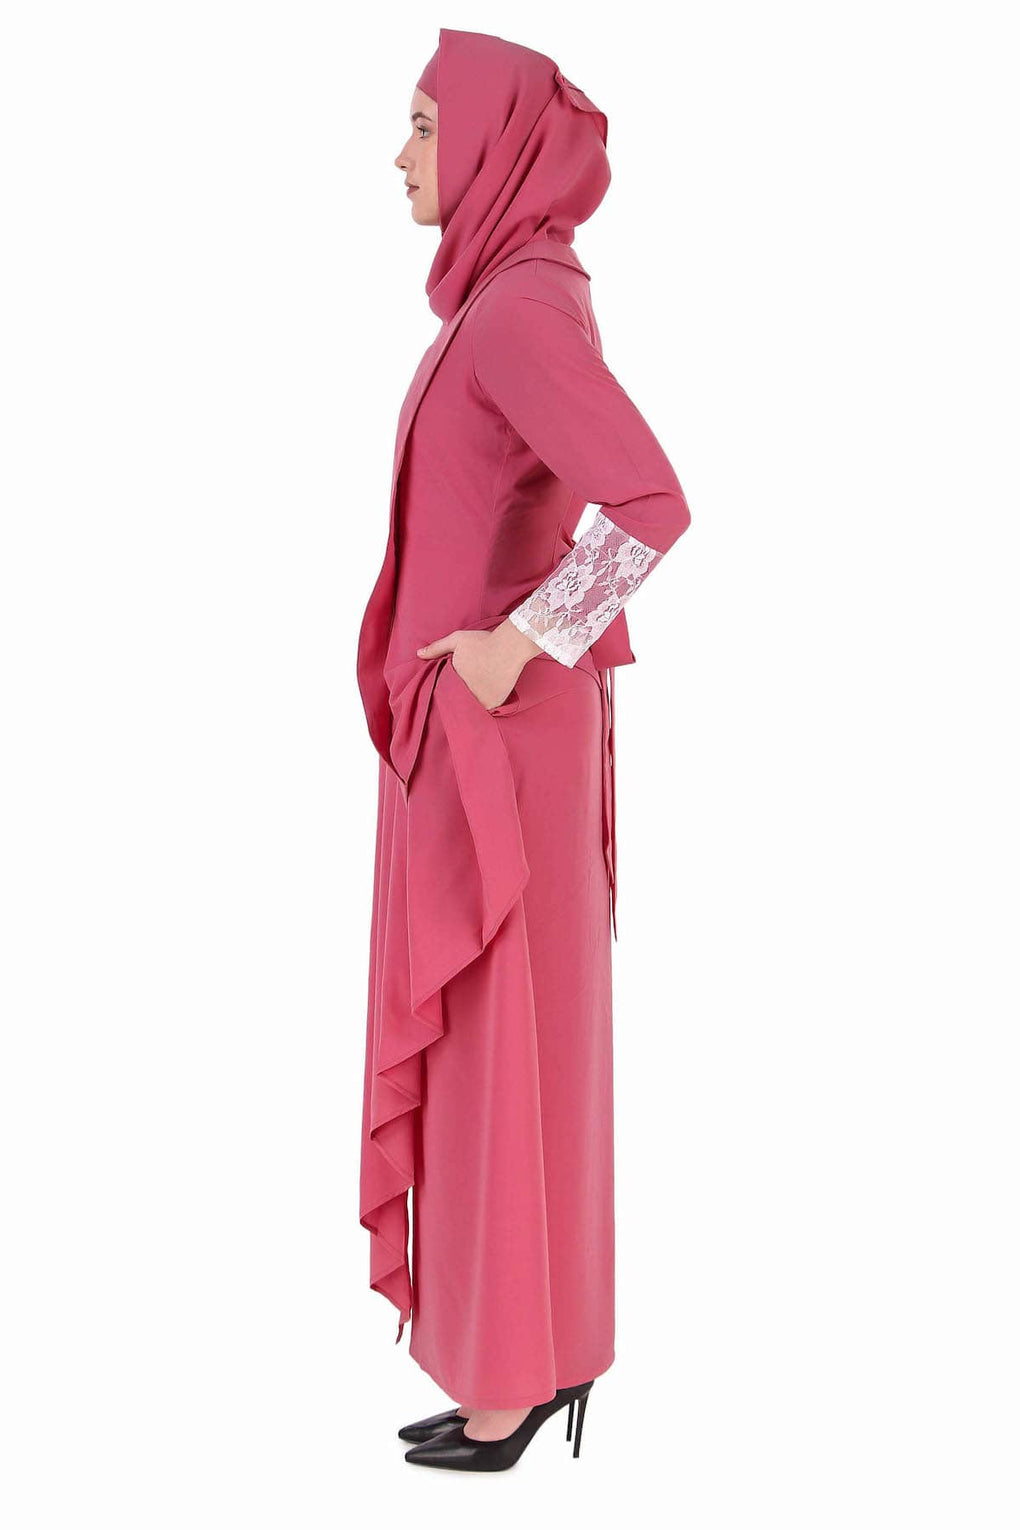 Designer Multi Layer Attached Jacket Style Abaya